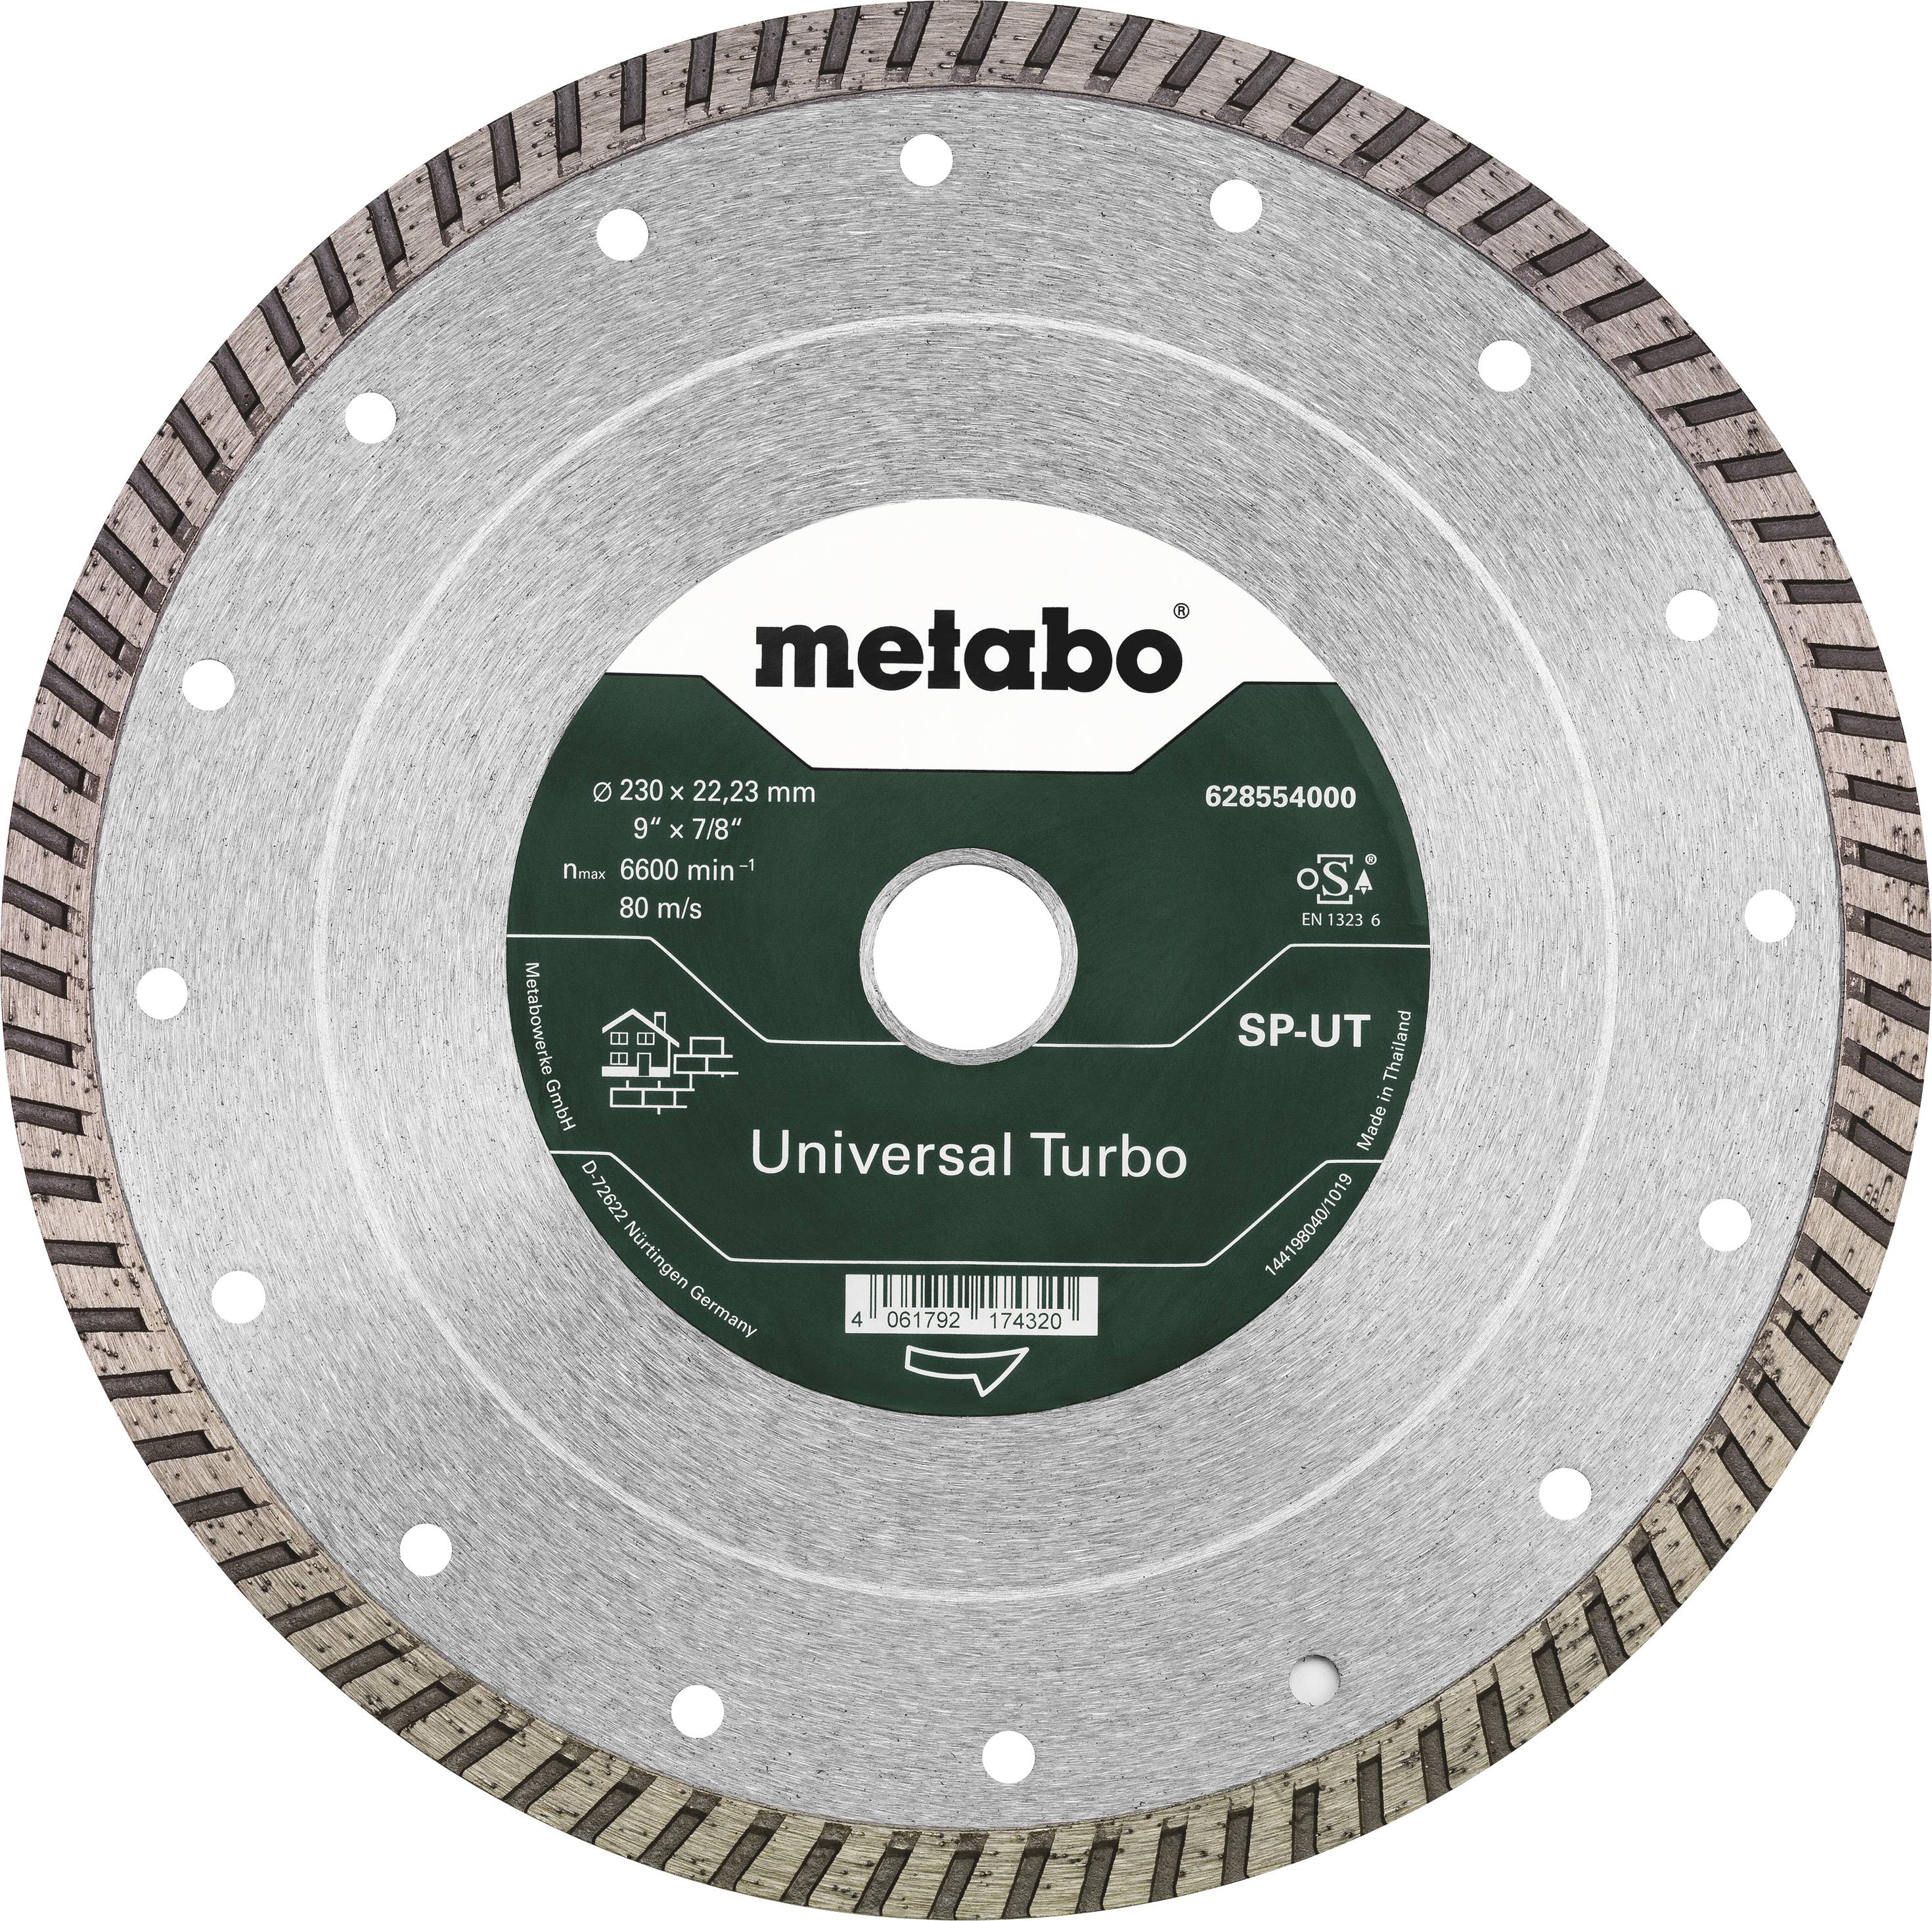 METABO Dia-TS 230x22,23mm,SP-UT,Universal,Turbo Metabo 628554000 Durchmesser 230 mm 1 St.